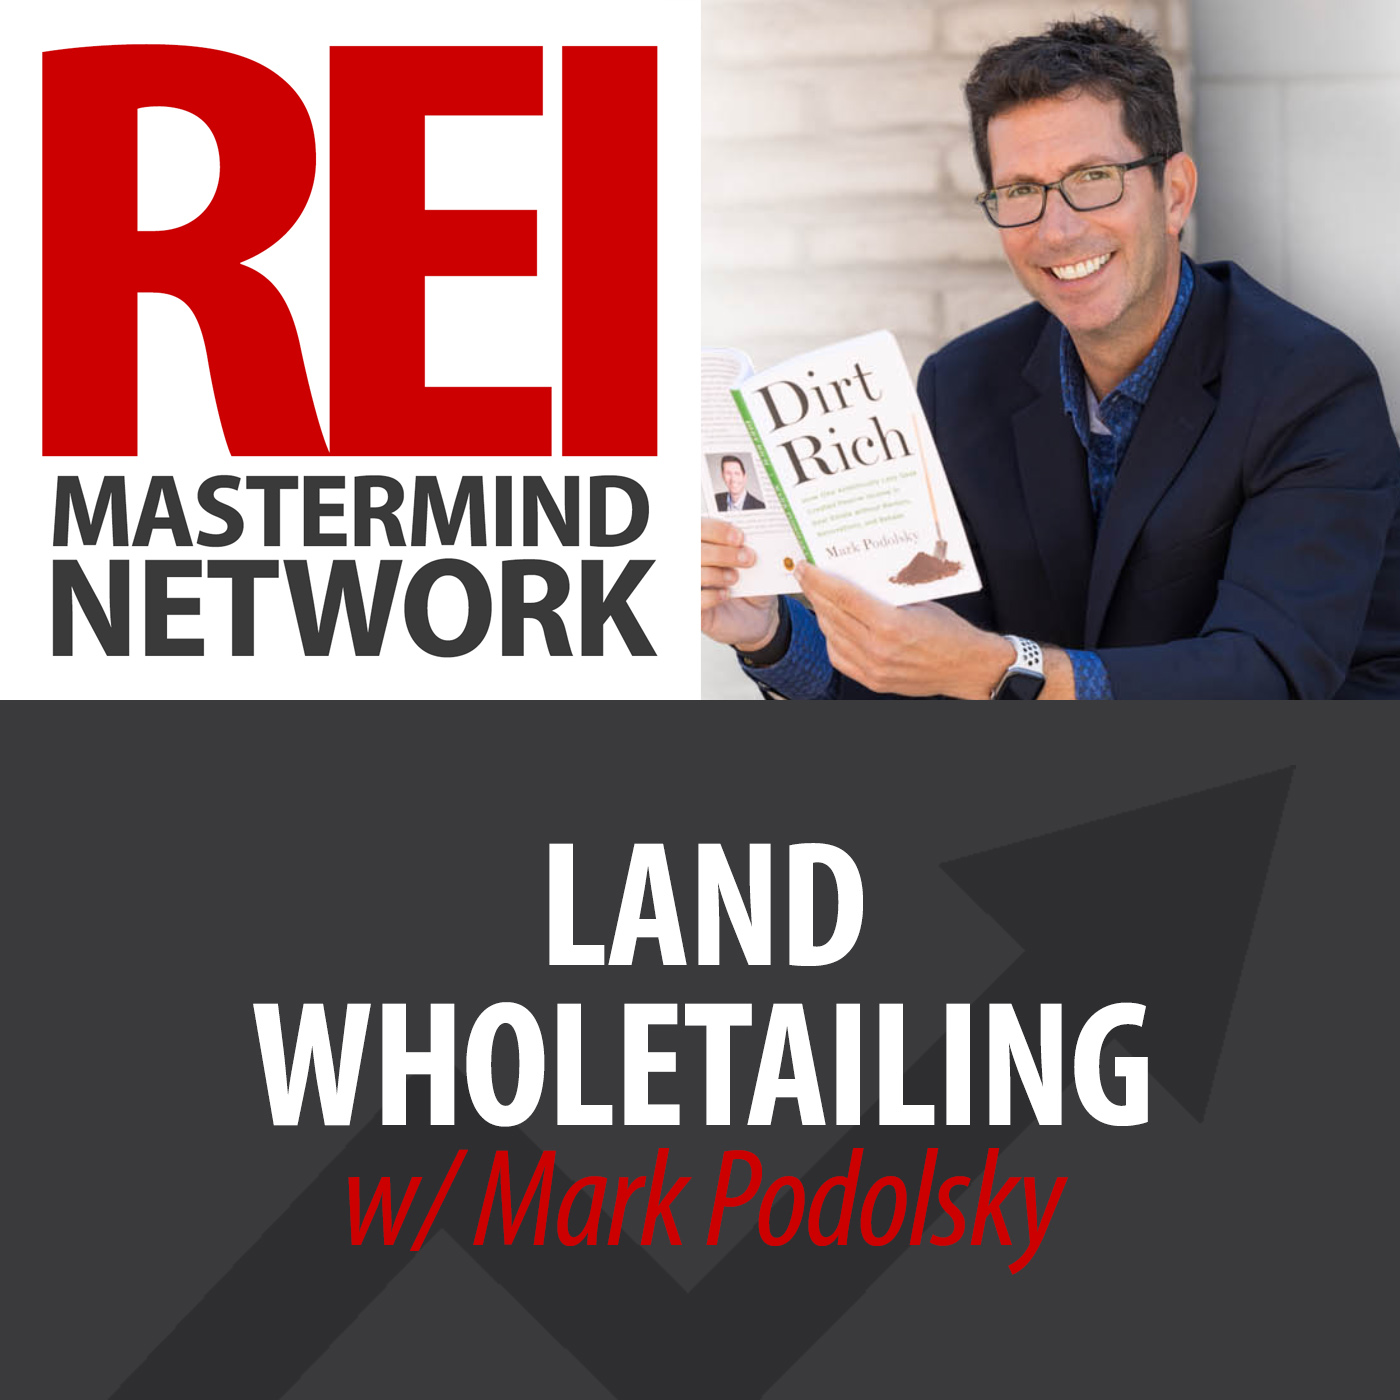 Land Wholetailing with "The Land Geek" Mark Podolsky Image